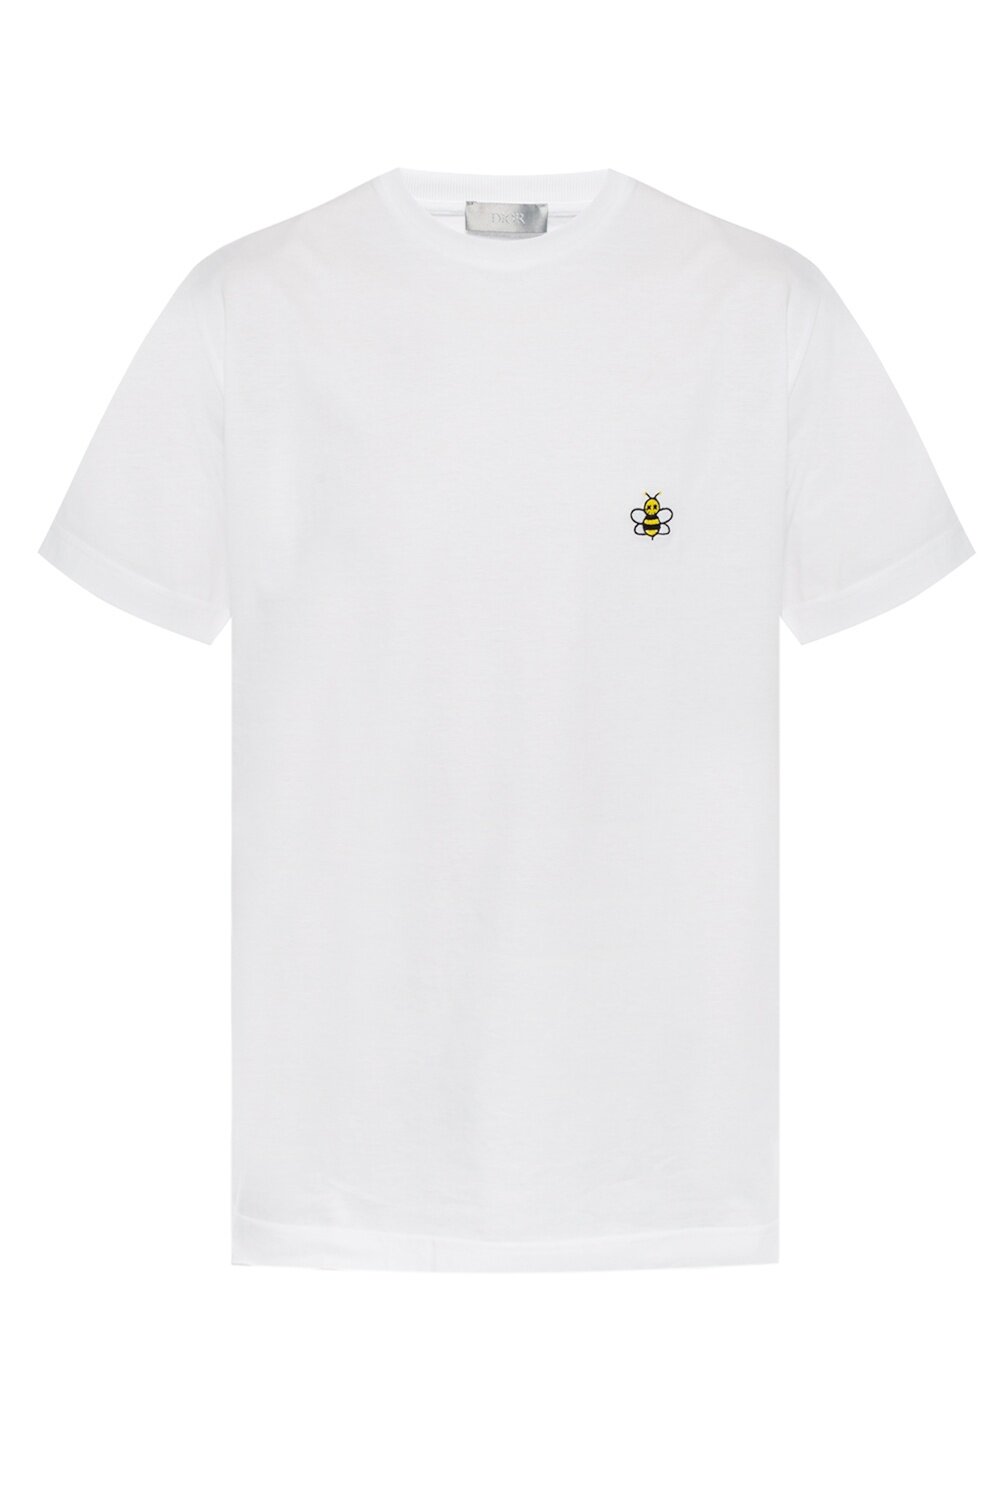 Dior x KAWS Bee T Shirt in White — UFO 